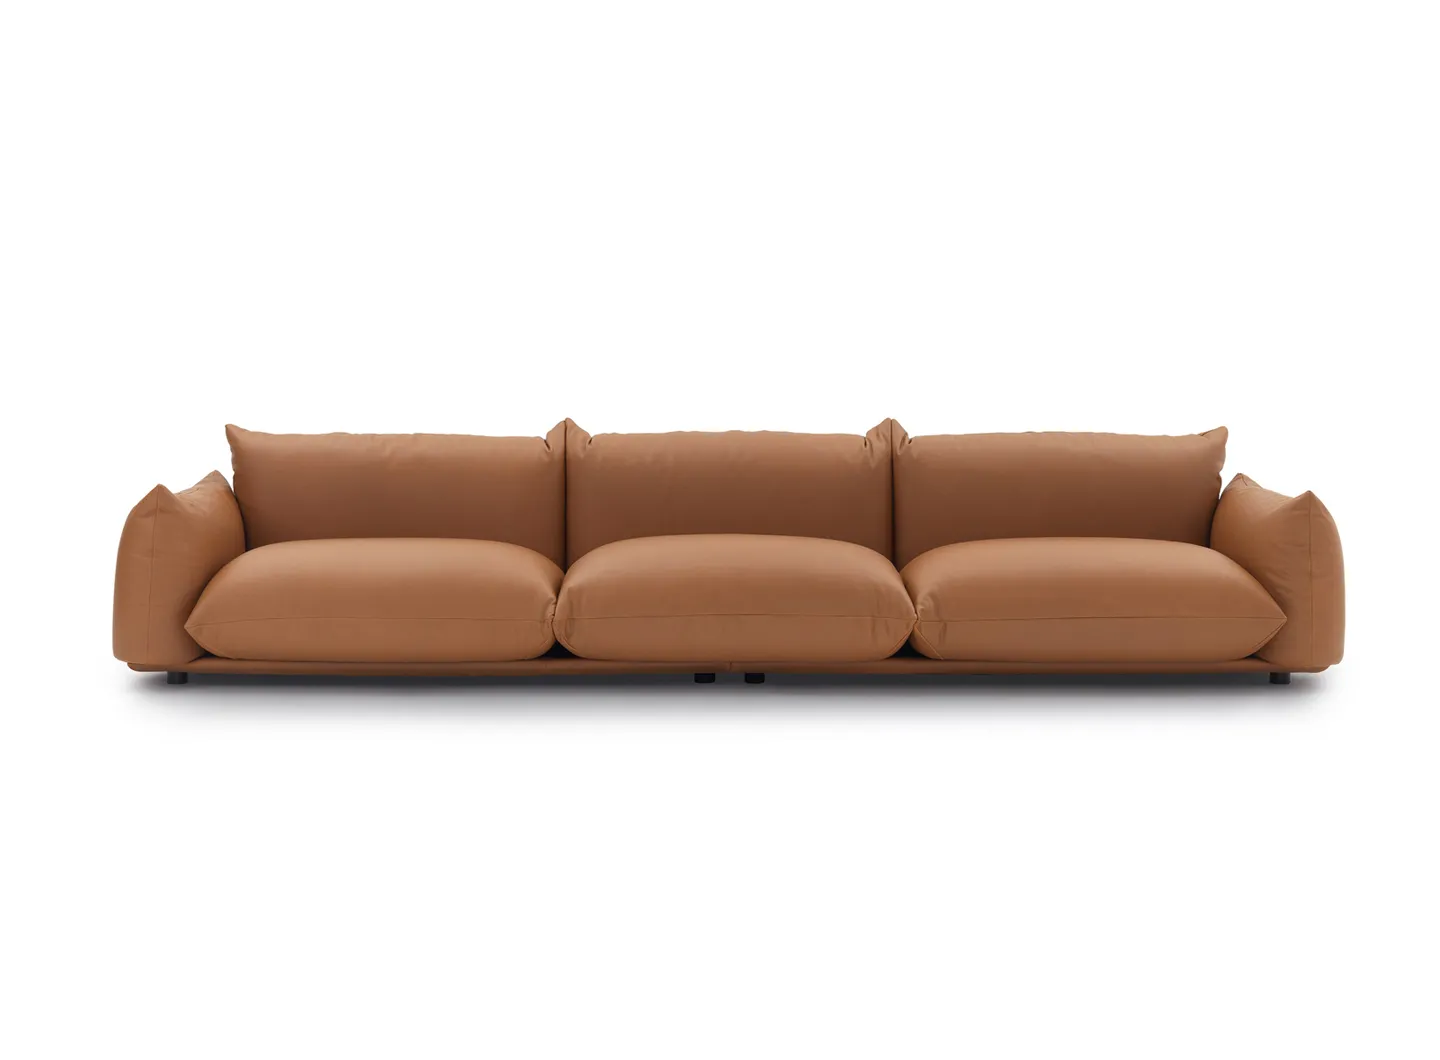 Marenco sofa - Leather version